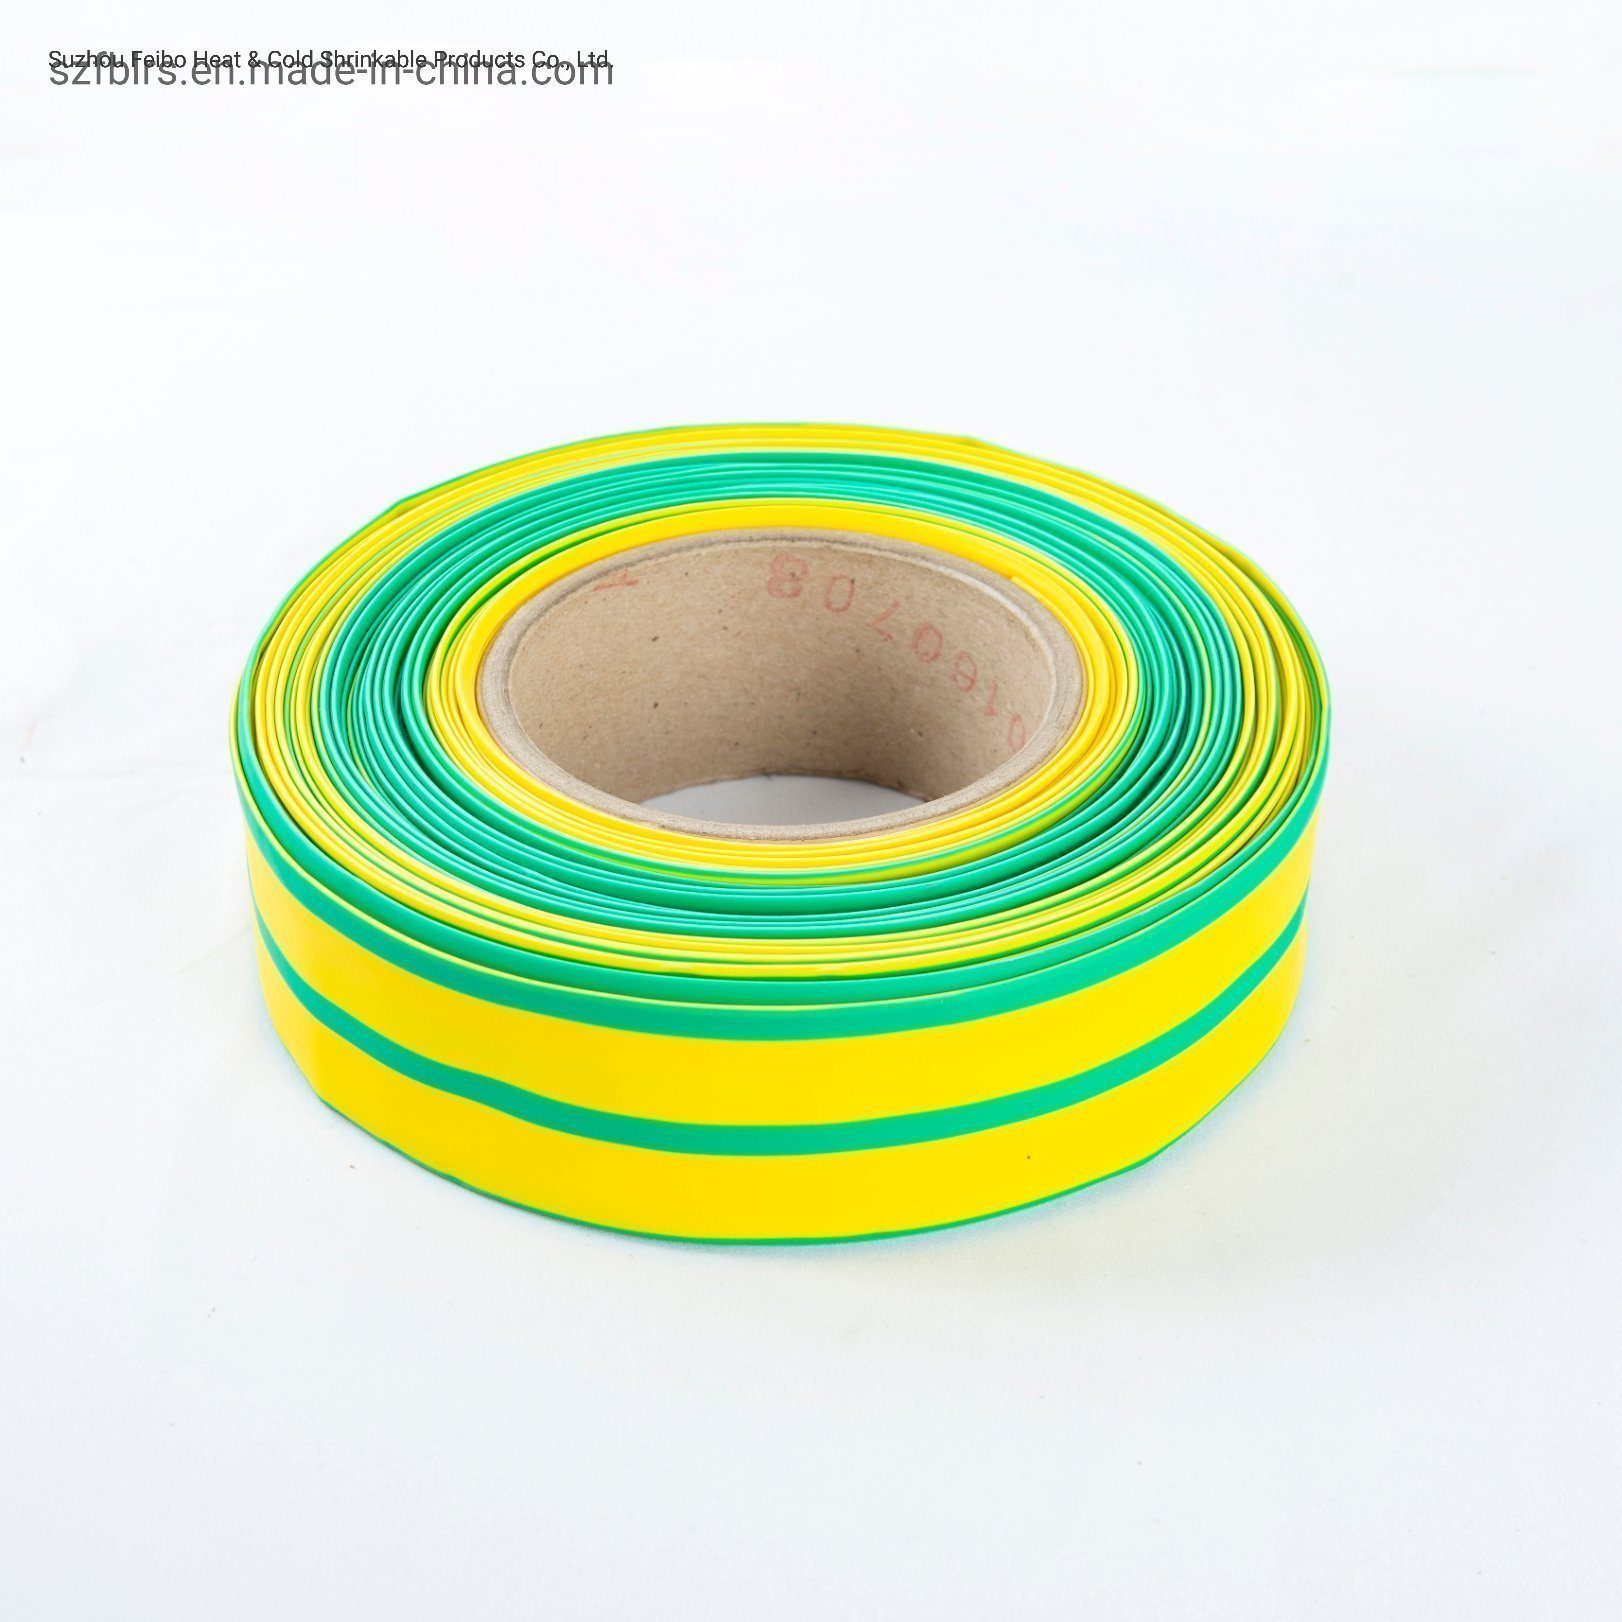 Szfb Yellow & Green Heat Shrink Tubing Heat Shrink Sleeve Thin Wall Heat Tube